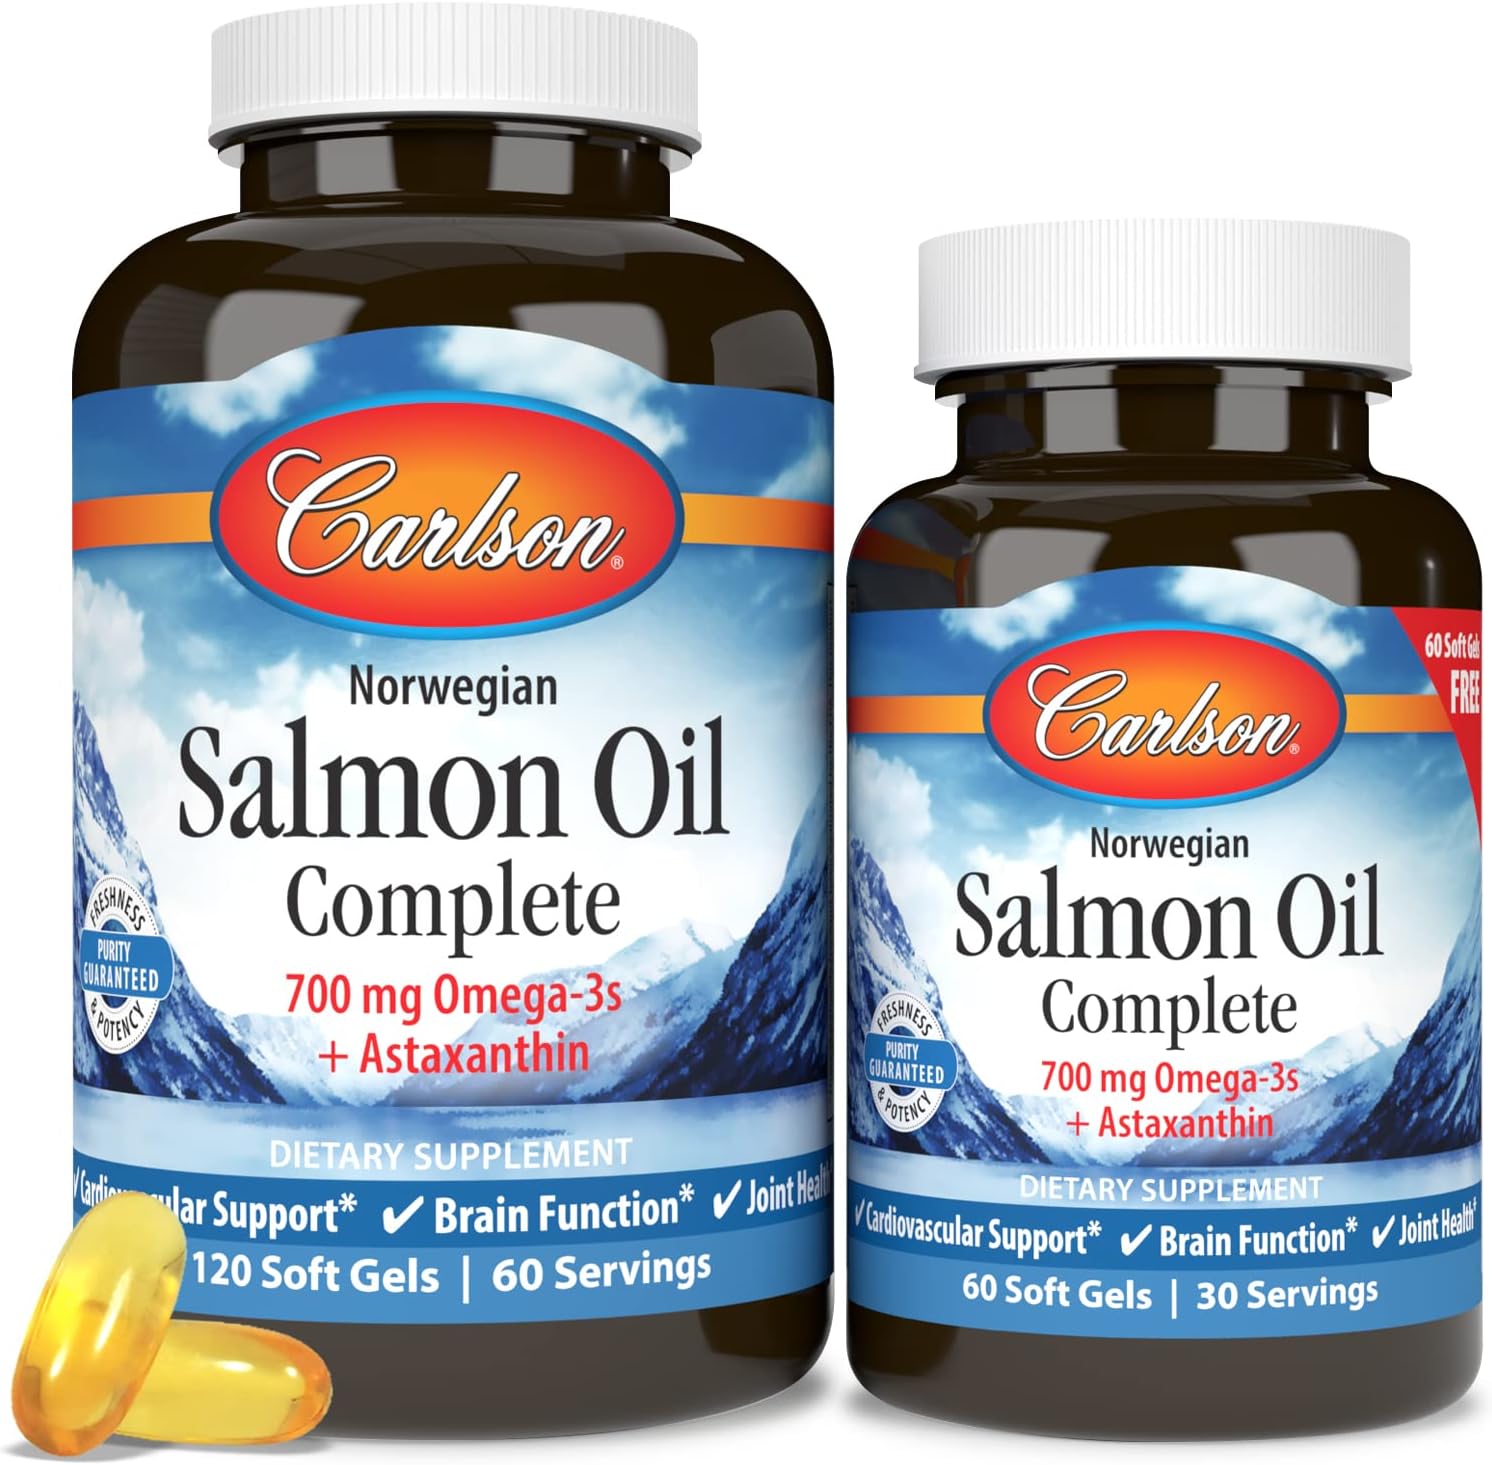 Carlson - Salmon Oil Complete, 700 mg Omega-3s + Astaxanthin, Norwegian, Heart, Brain & Joint Health, 120+60 Softgels : Health & Household